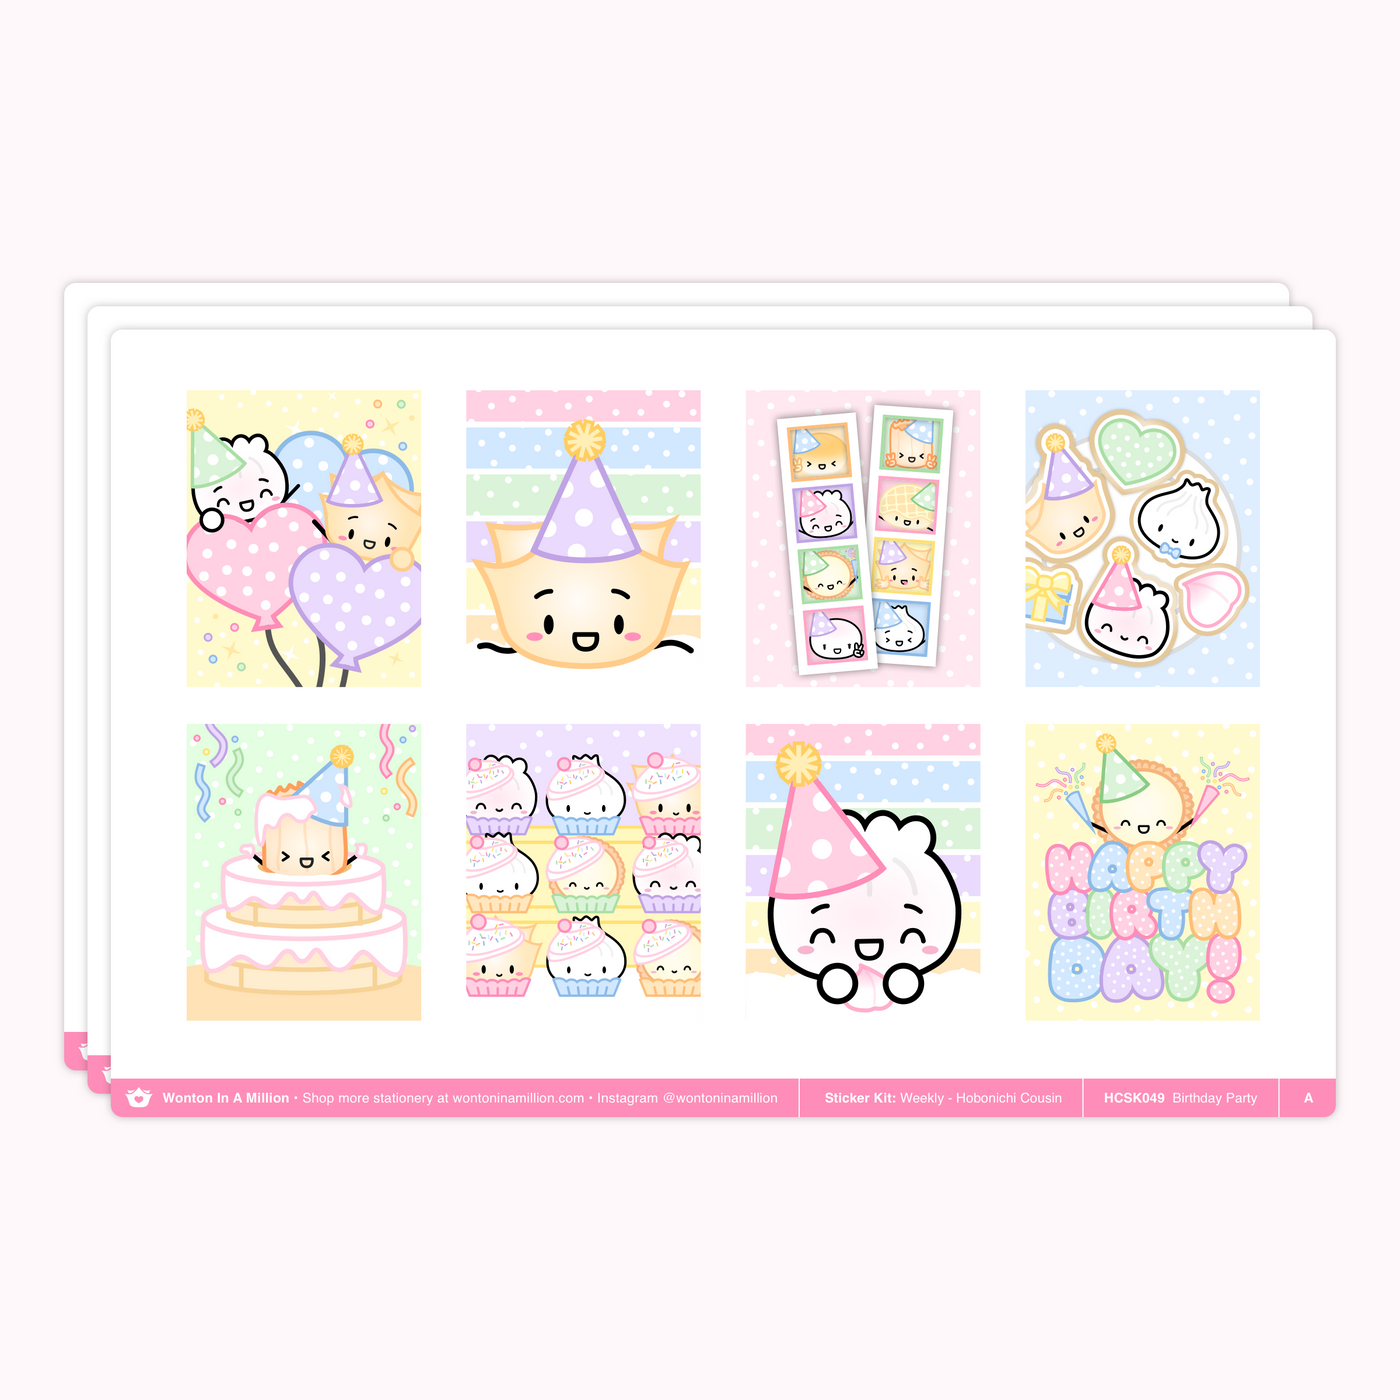 Birthday Party Weekly Sticker Kit (Hobonichi Cousin)